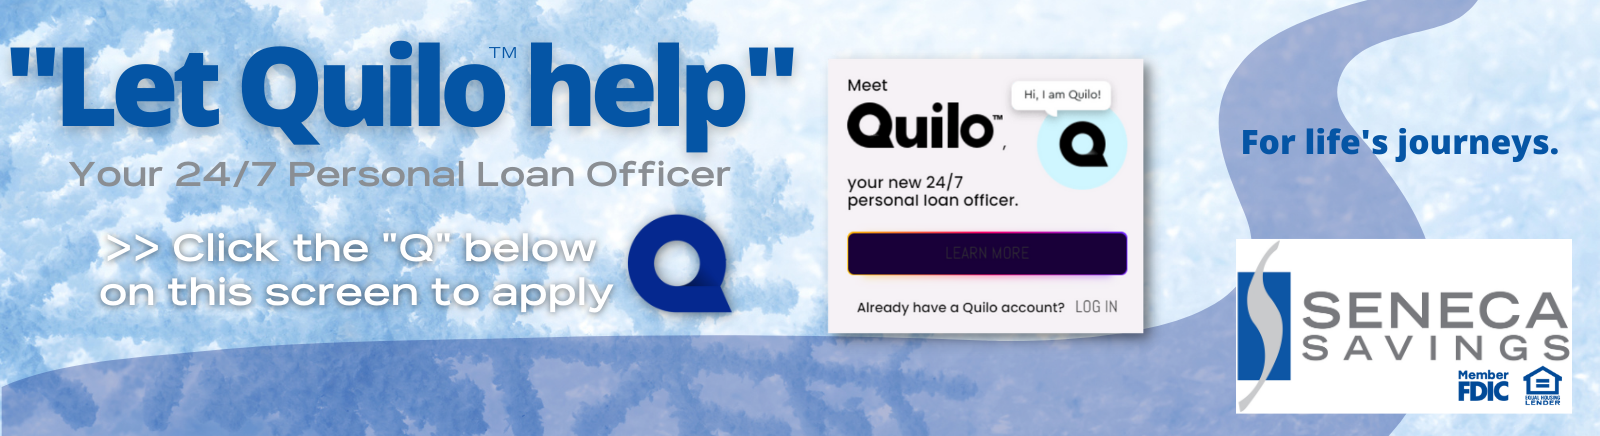 quilo loans with seneca savings